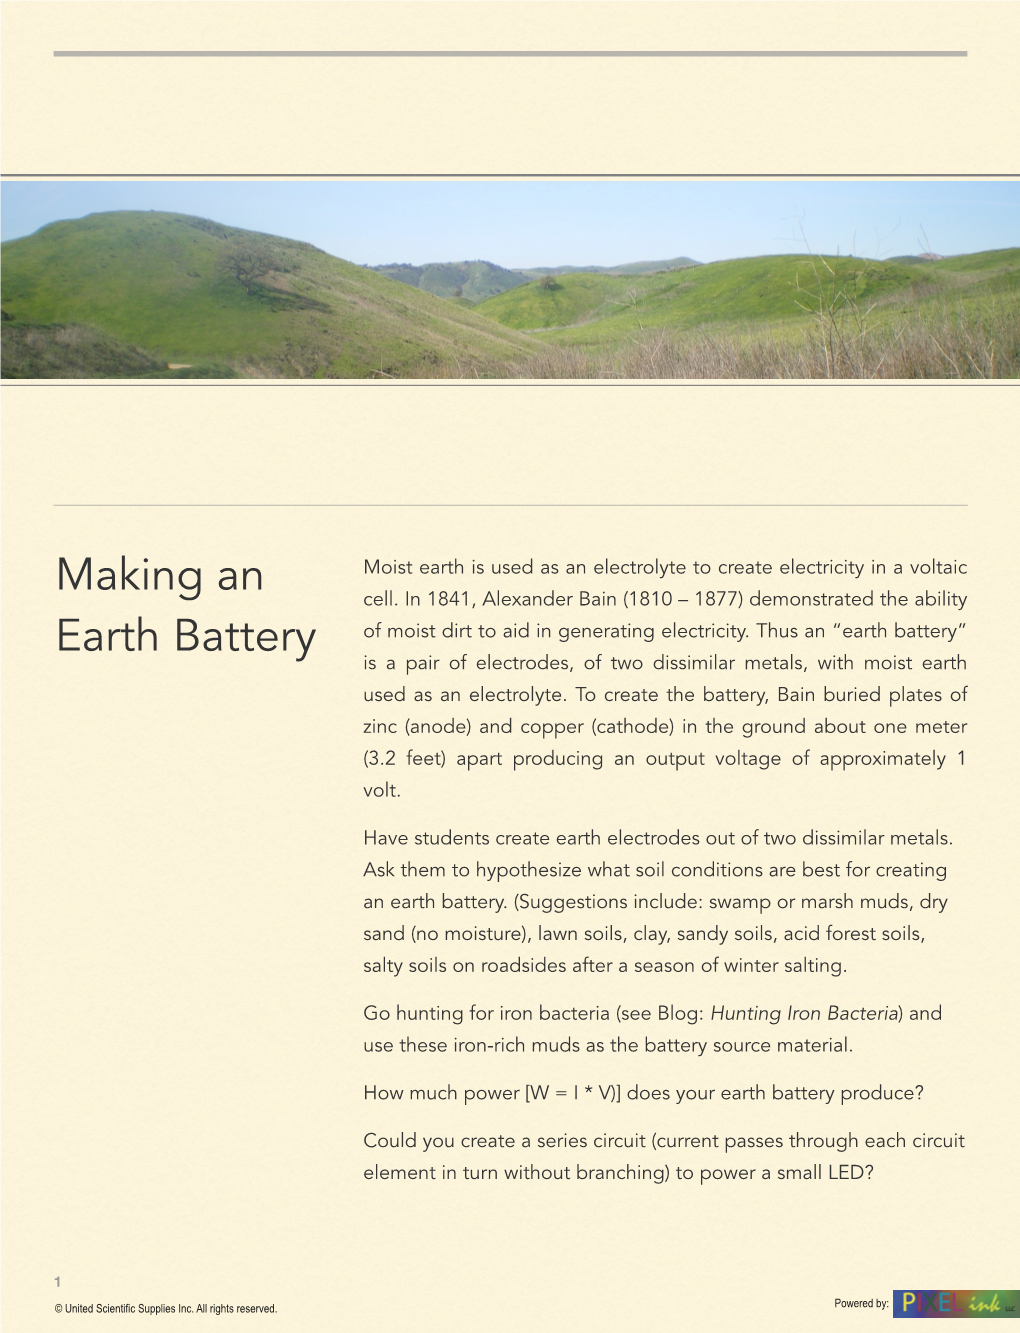 Making an Earth Battery